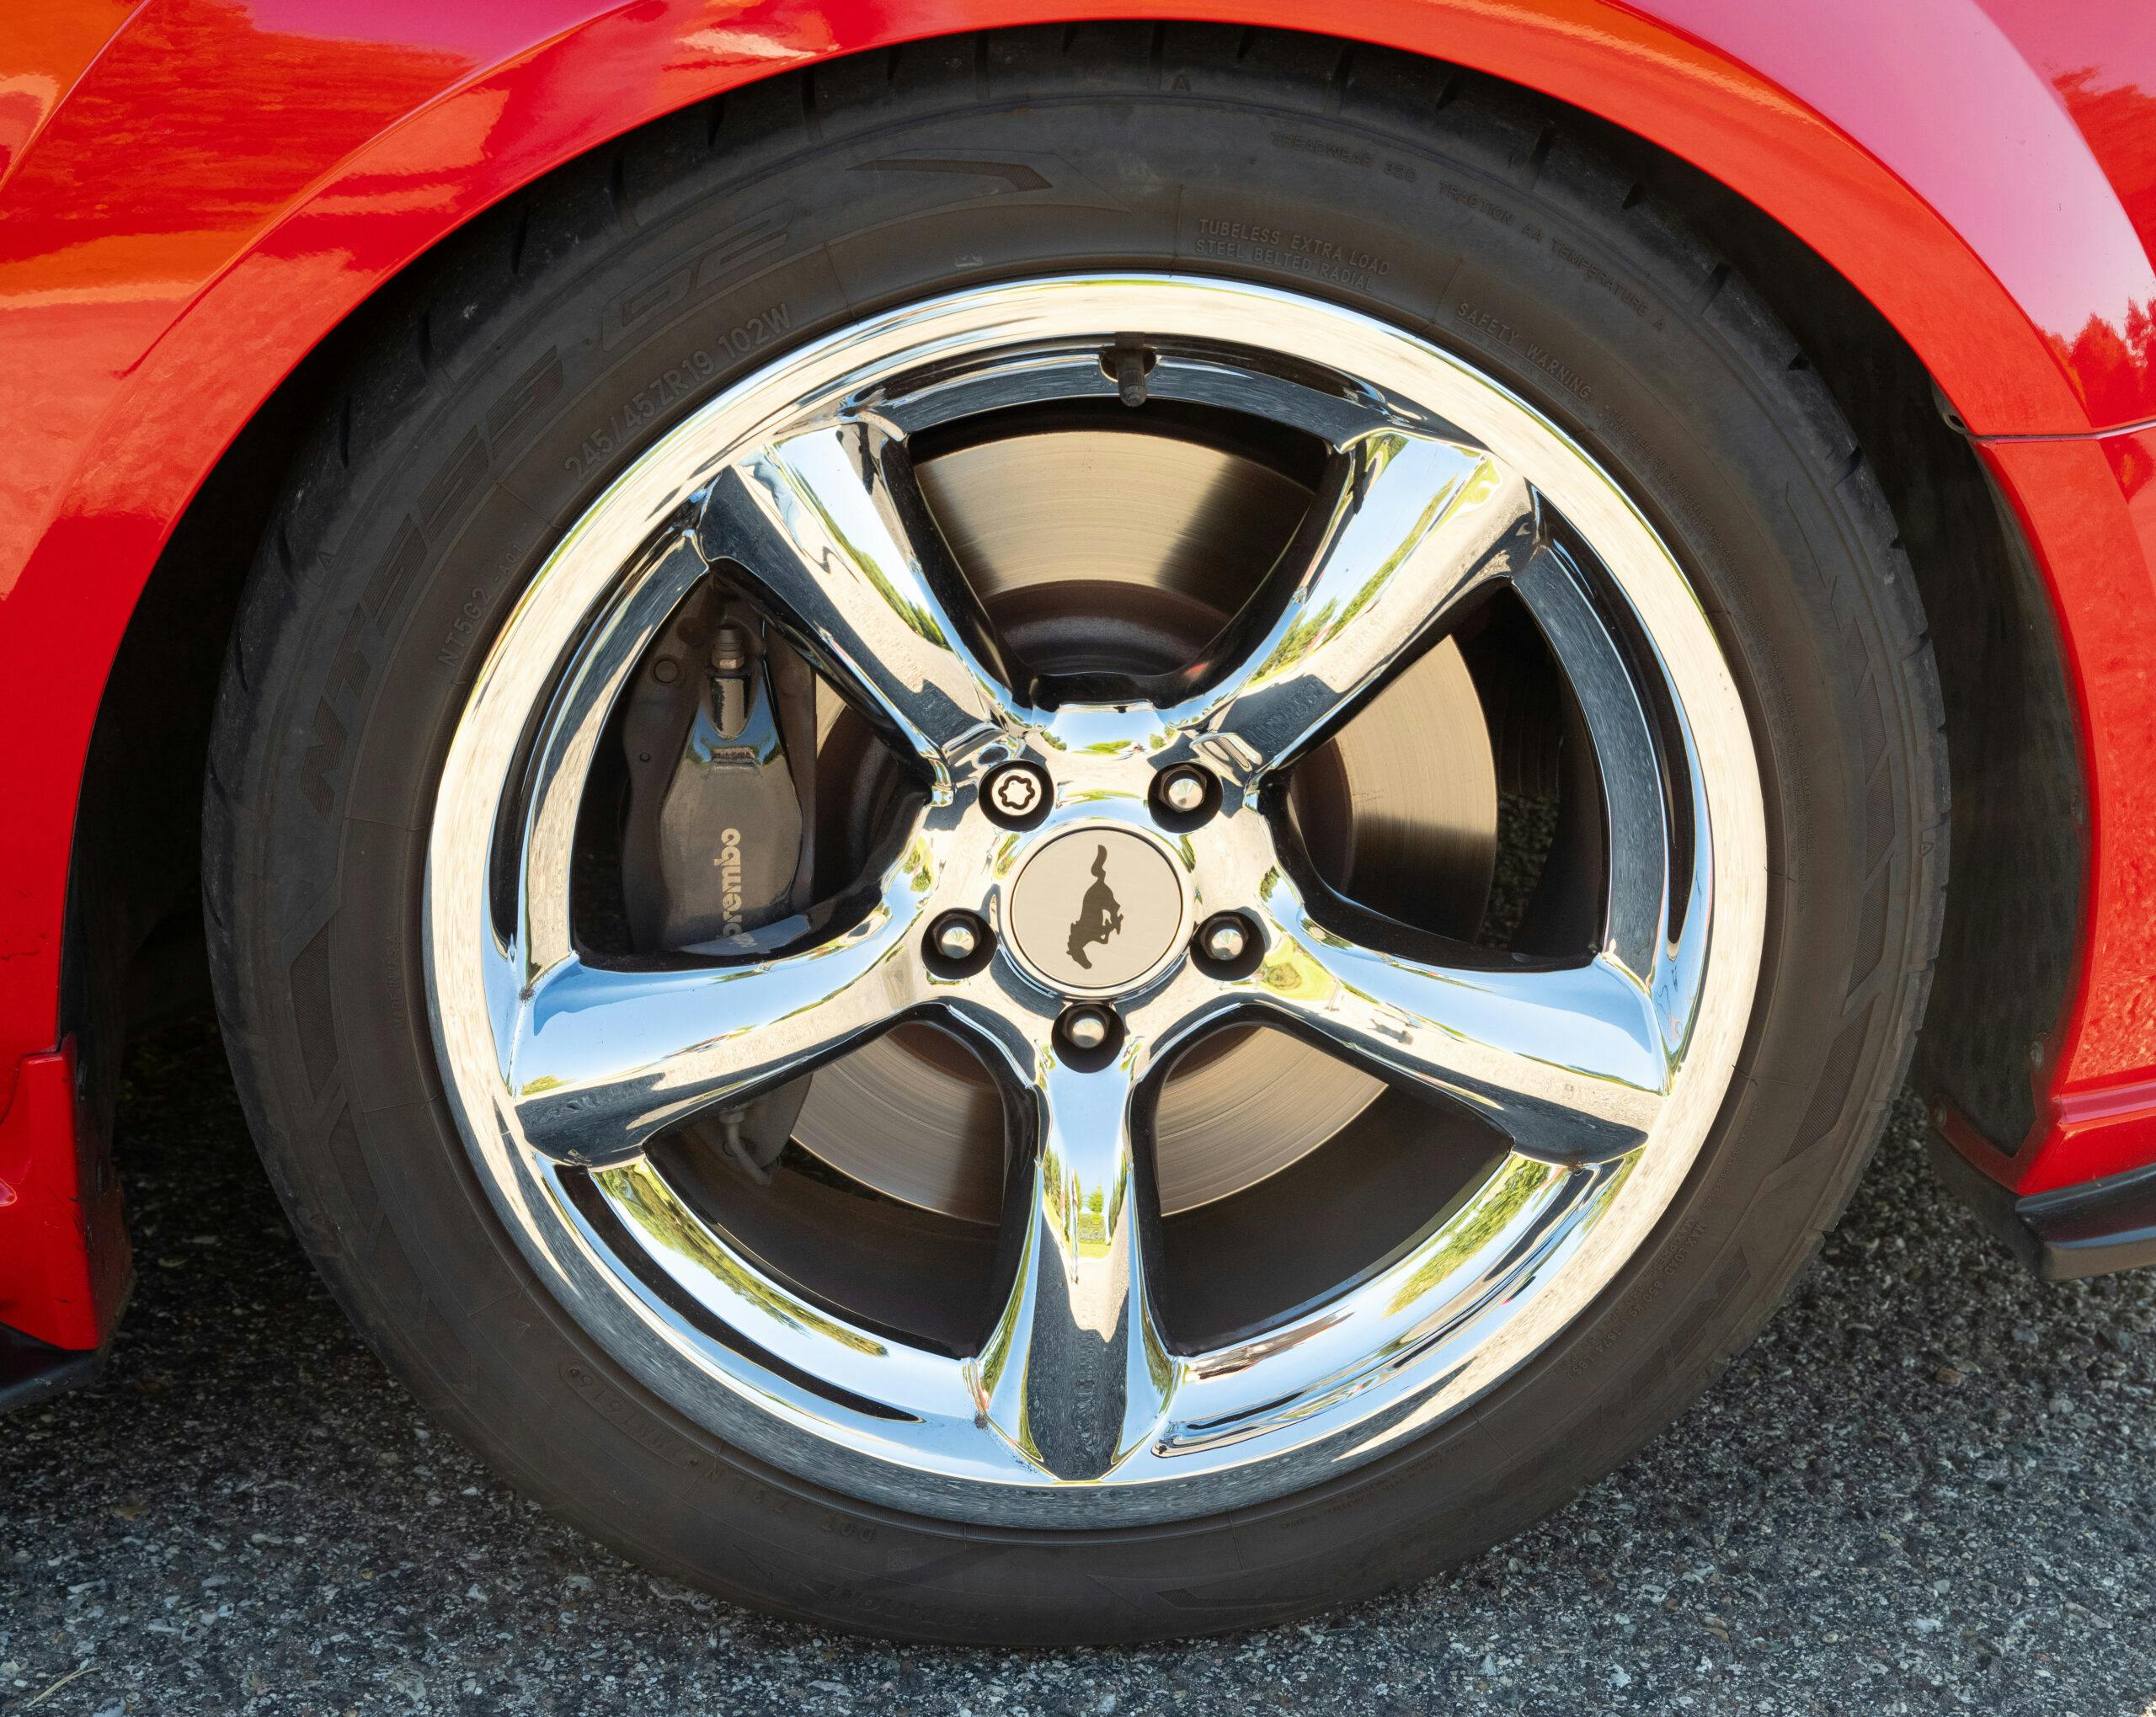 2006 Mustang GT custom livery wheel tire brembo brakes